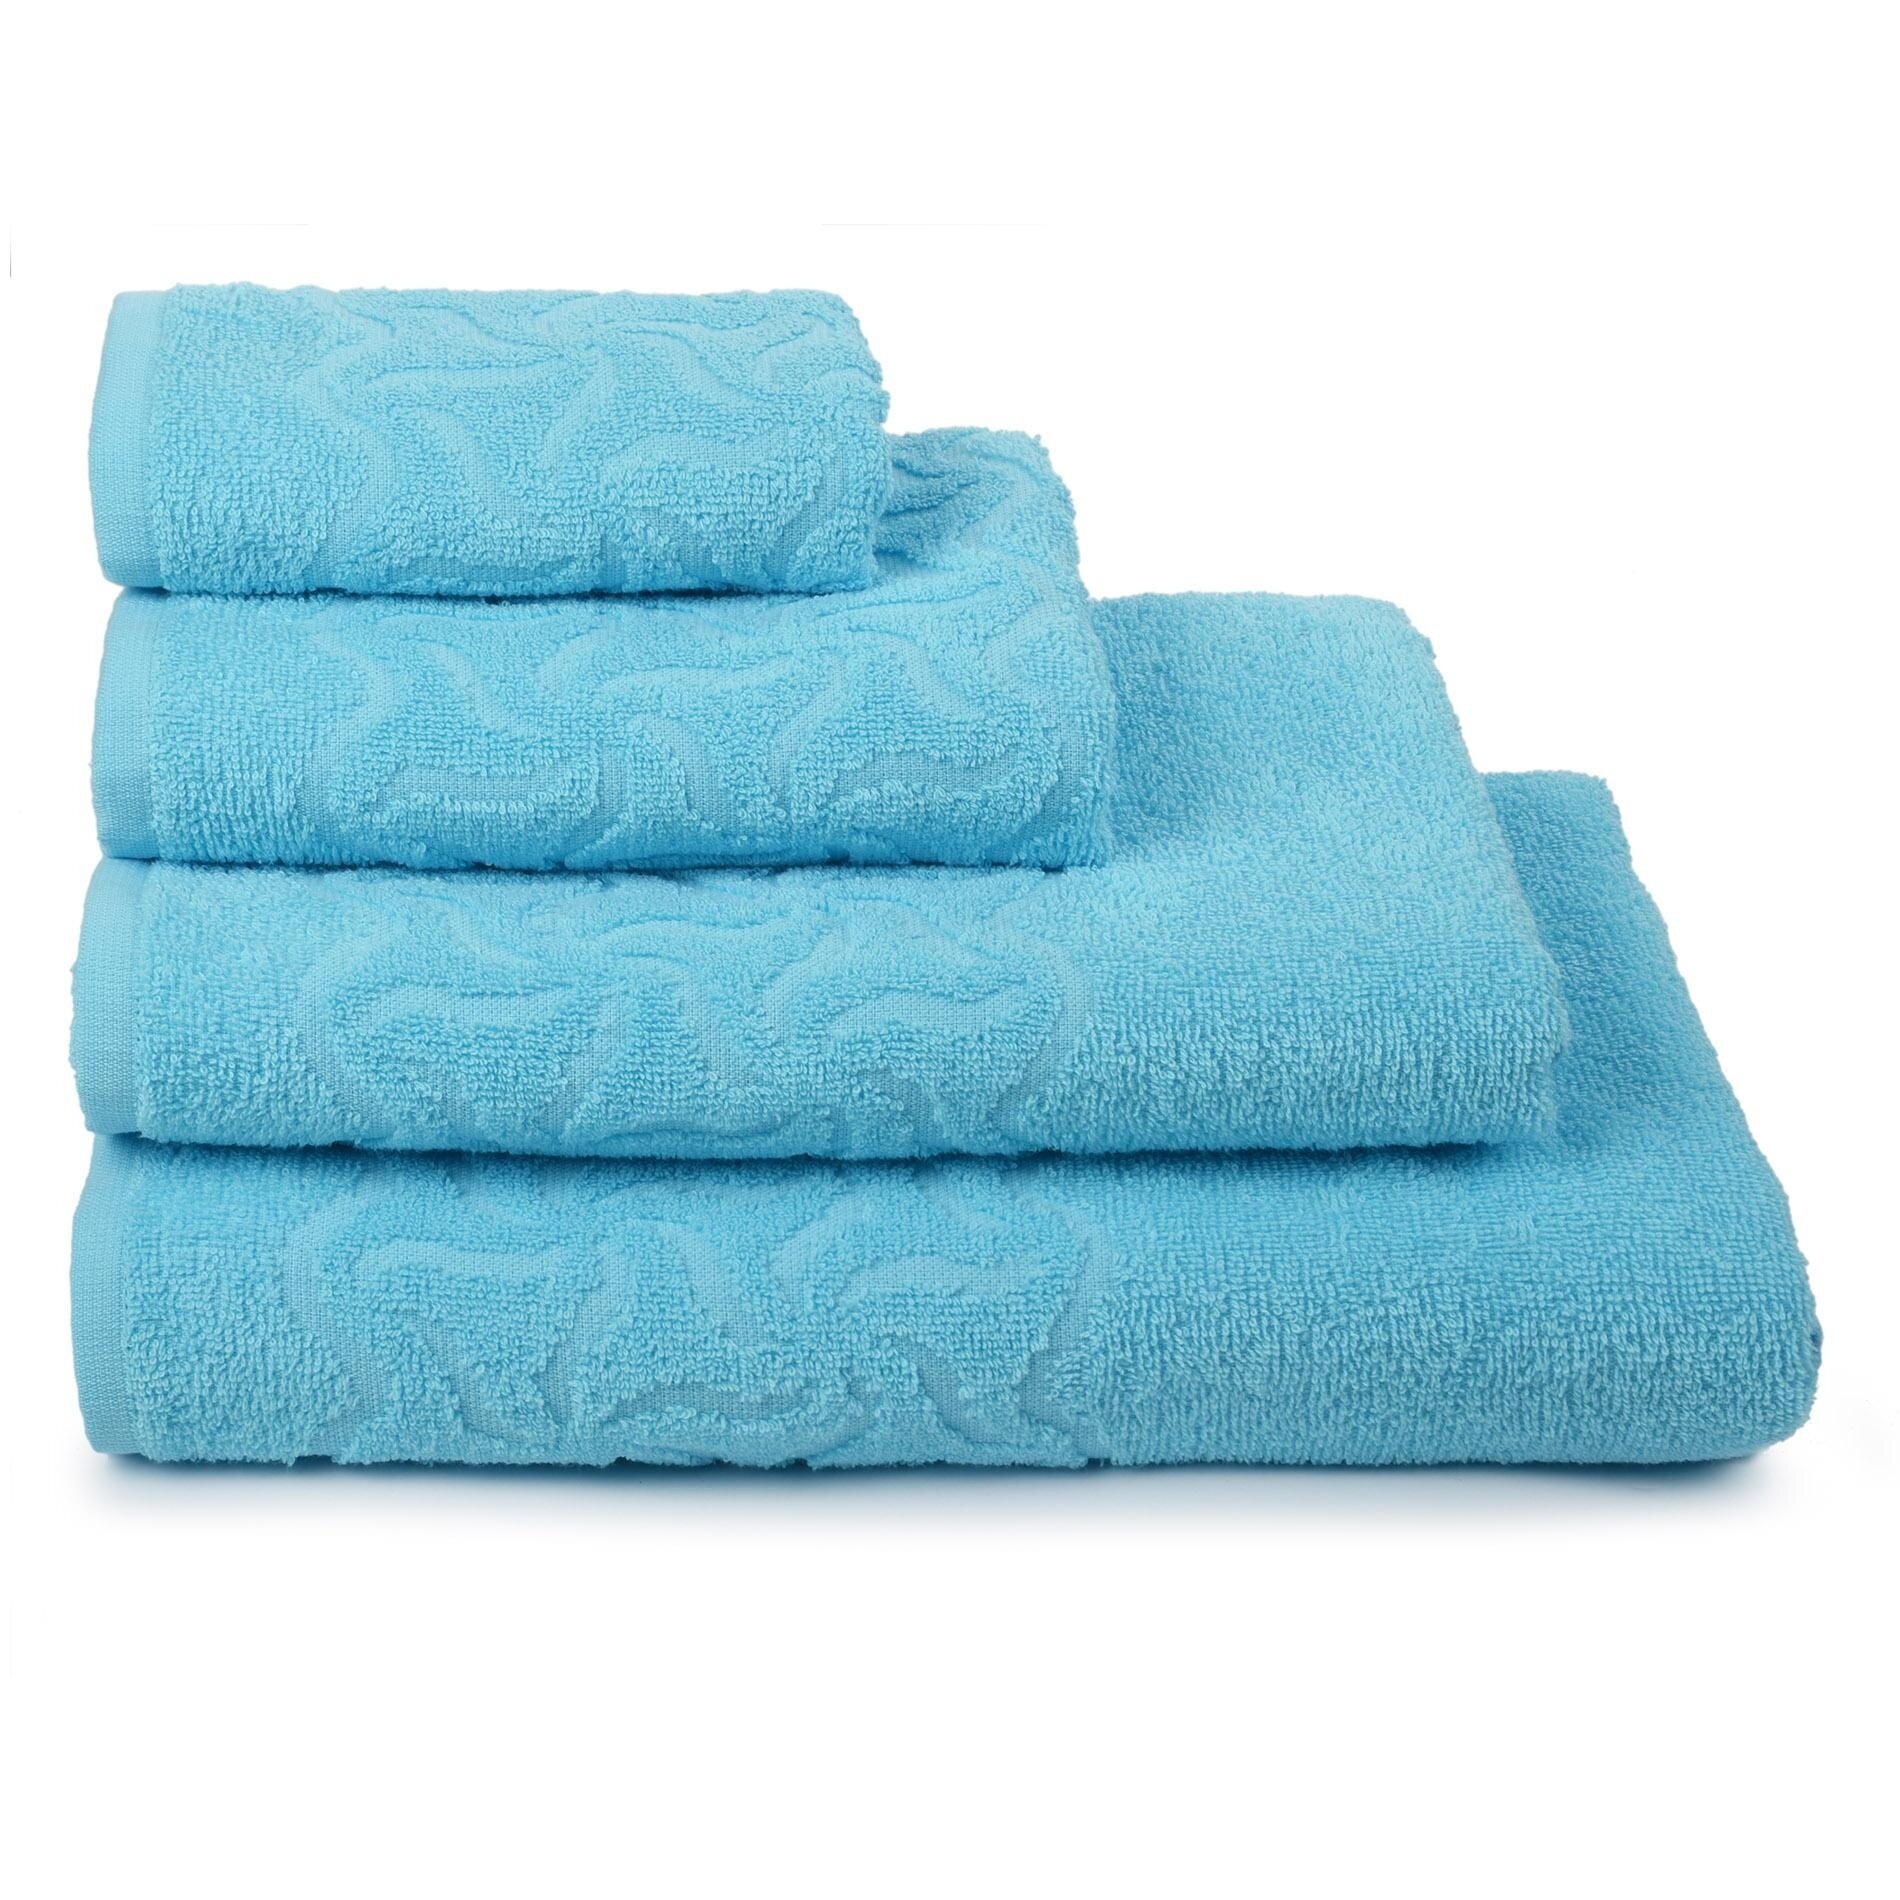 Полотенце банное Cleanelly, Махровая ткань, 100x150 см, голубой, 1 шт.